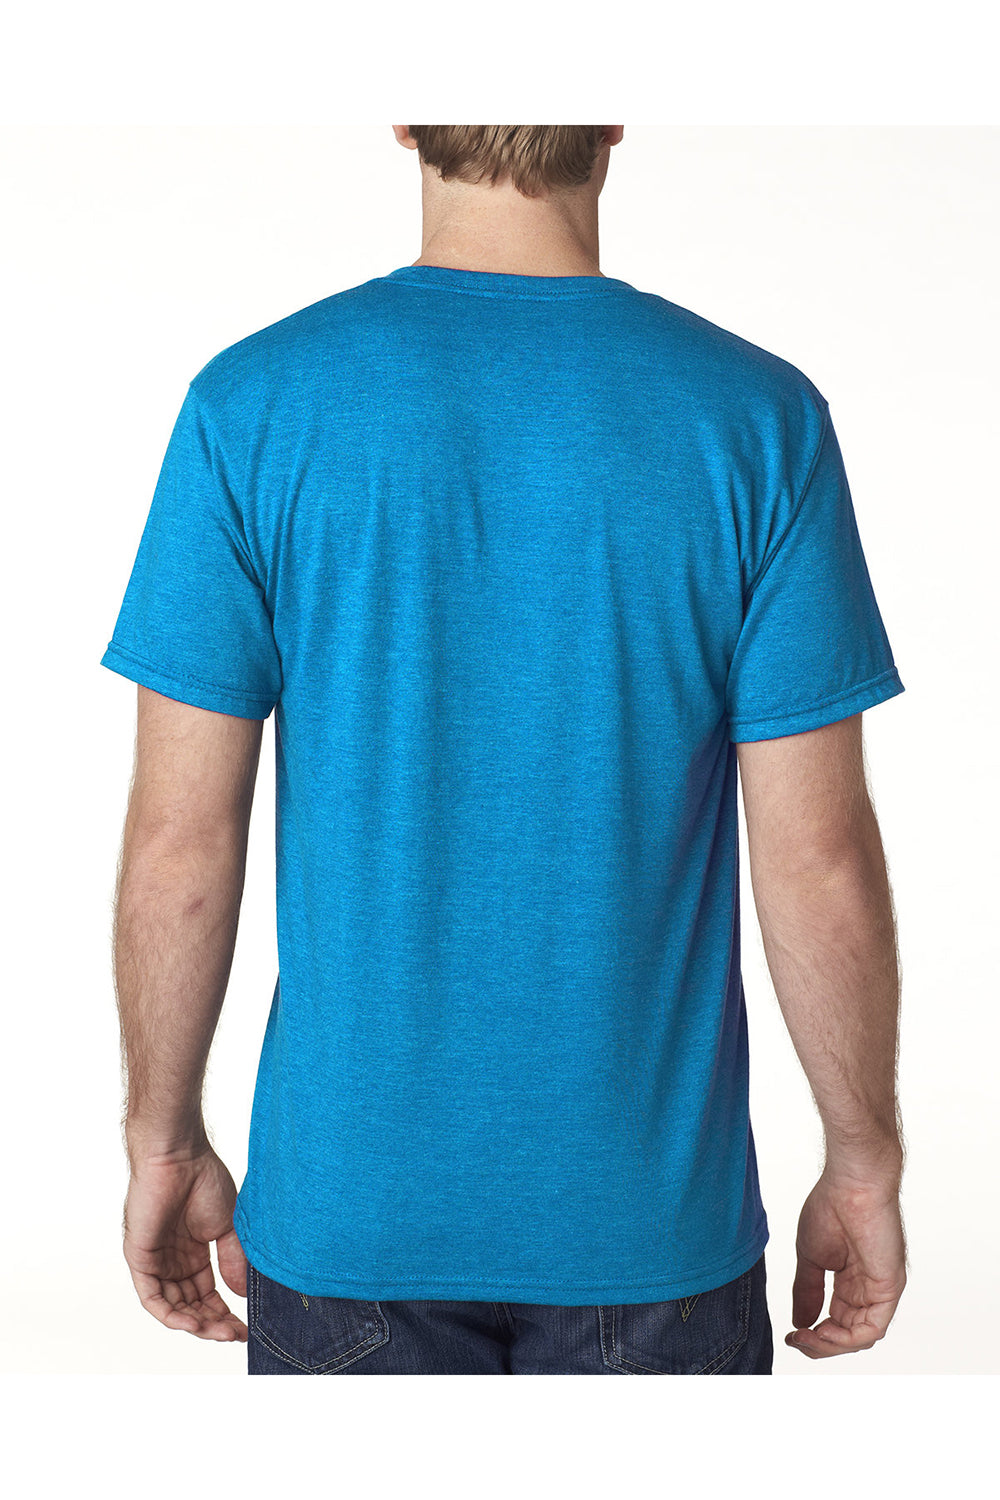 Bayside 5010 Mens USA Made Short Sleeve Crewneck T-Shirt Heather Turquoise Blue Model Back